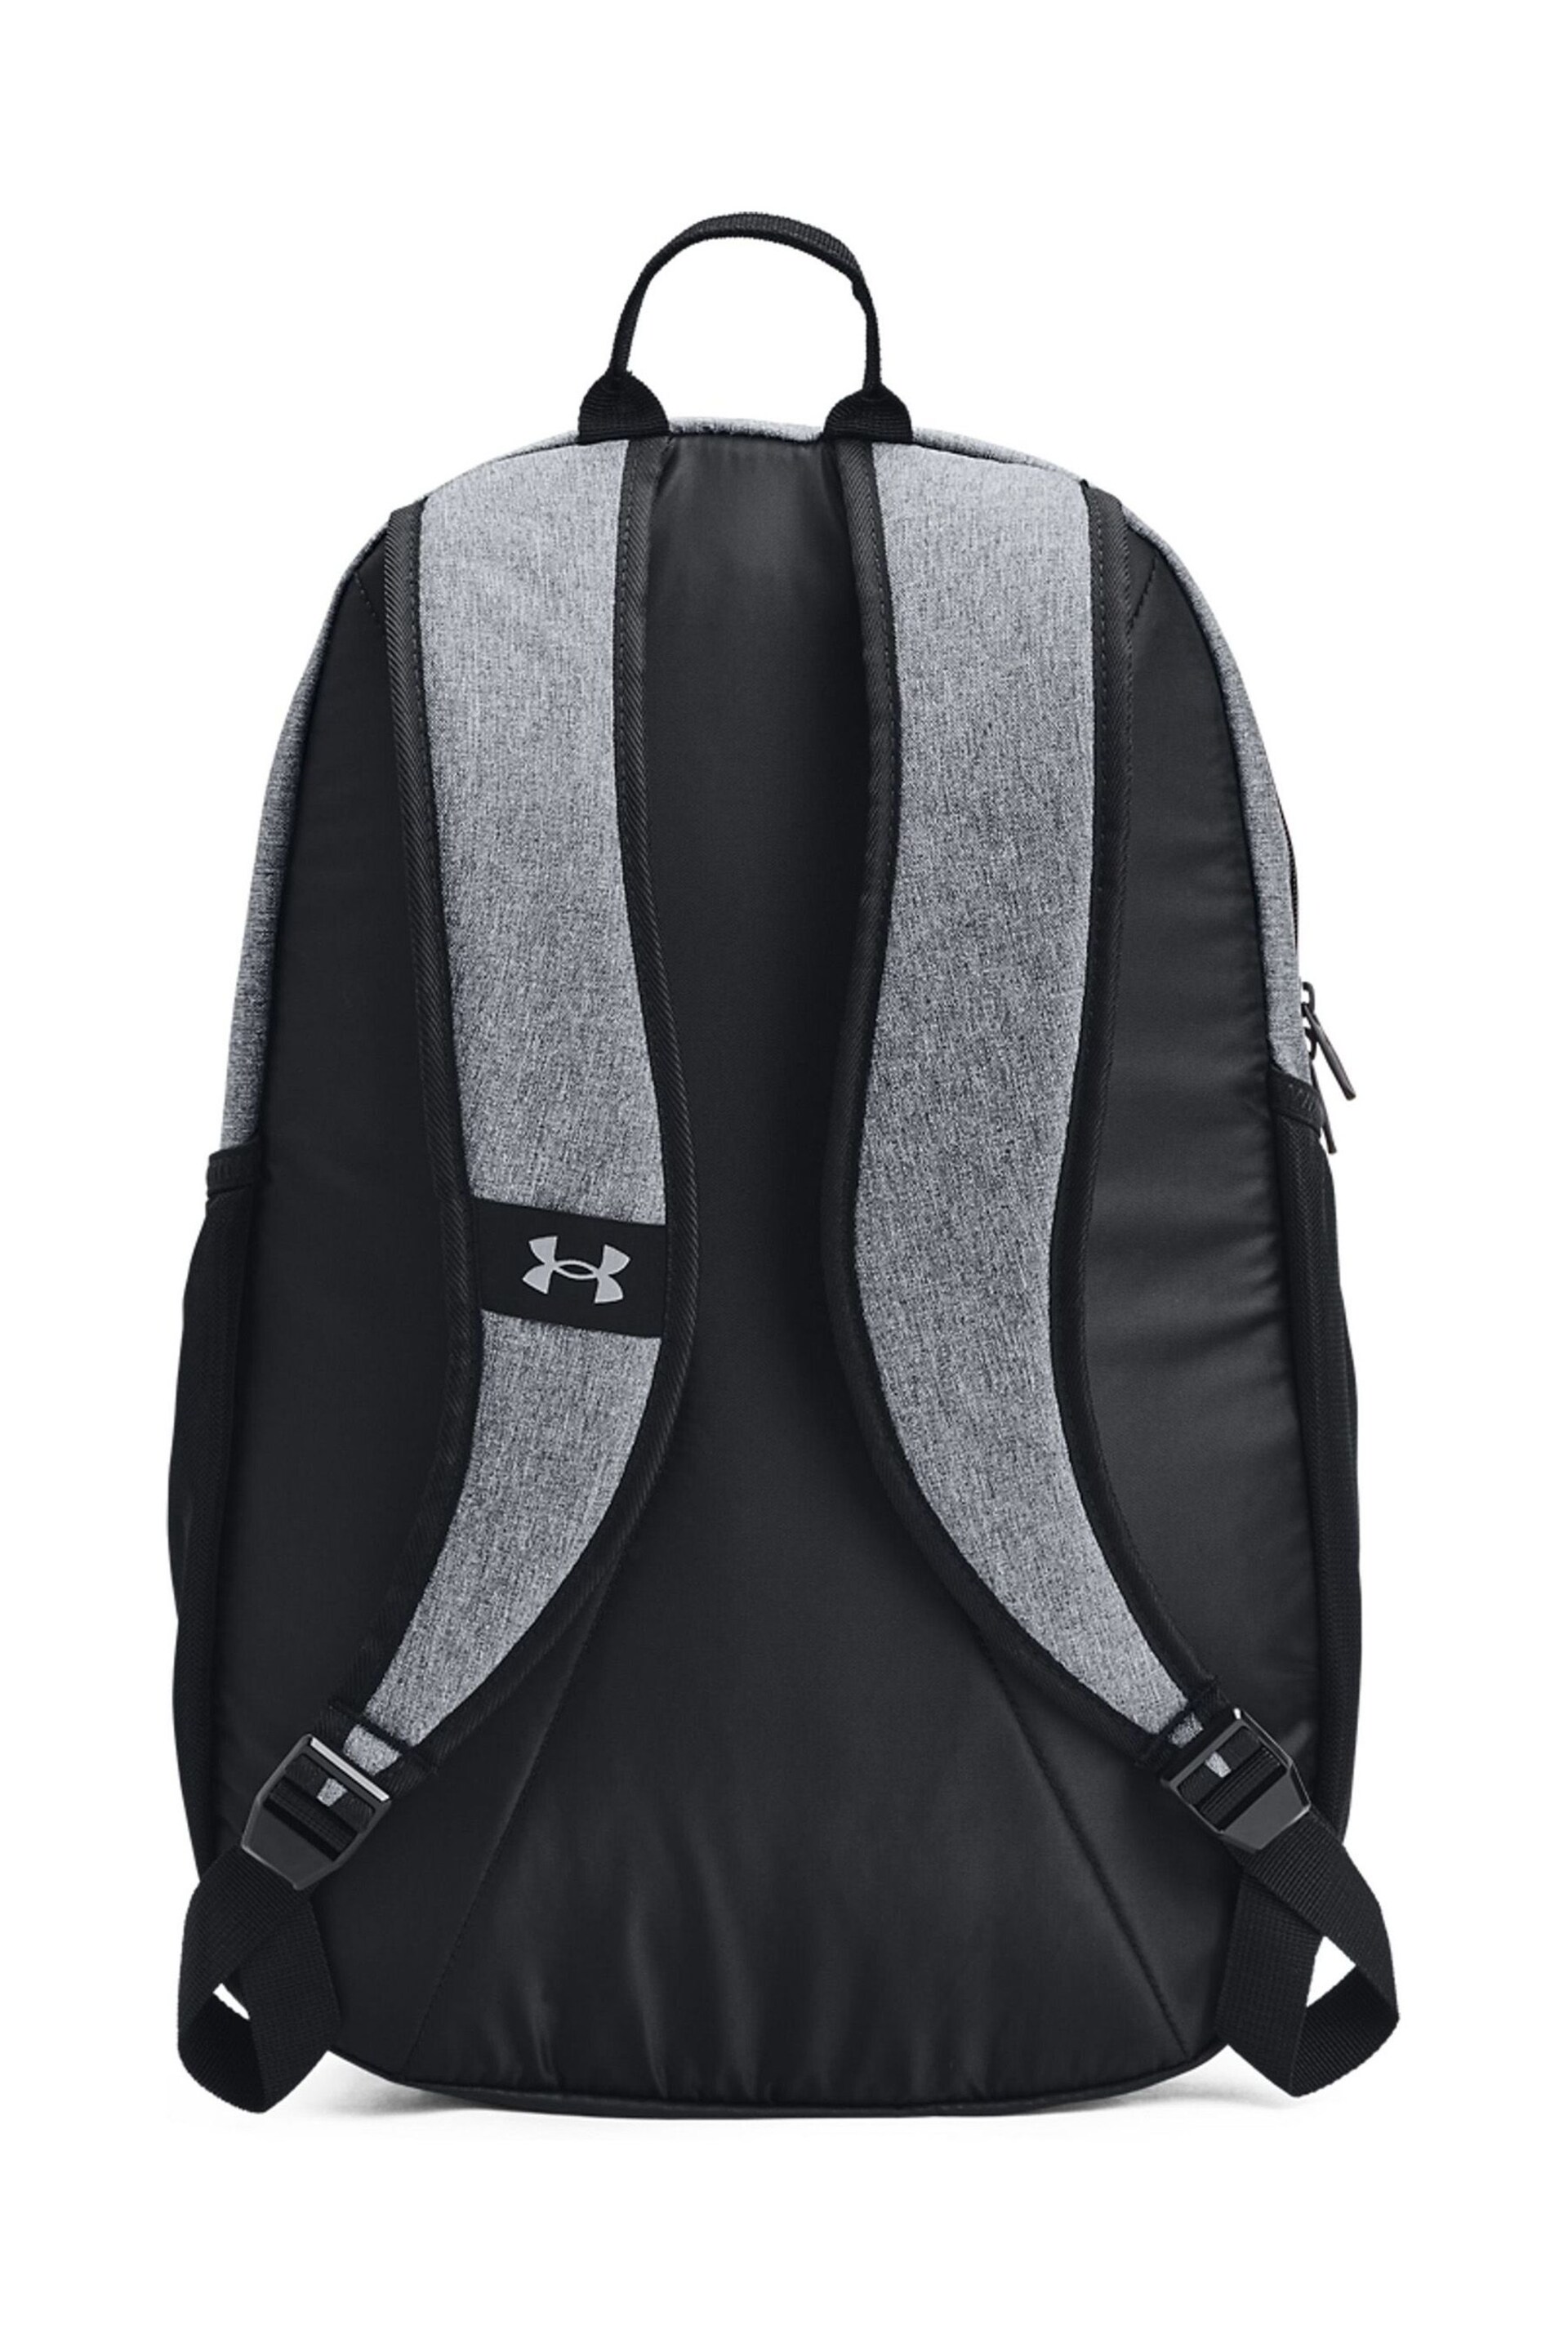 Under Armour Grey Hustle Sport Backpack - Image 3 of 7